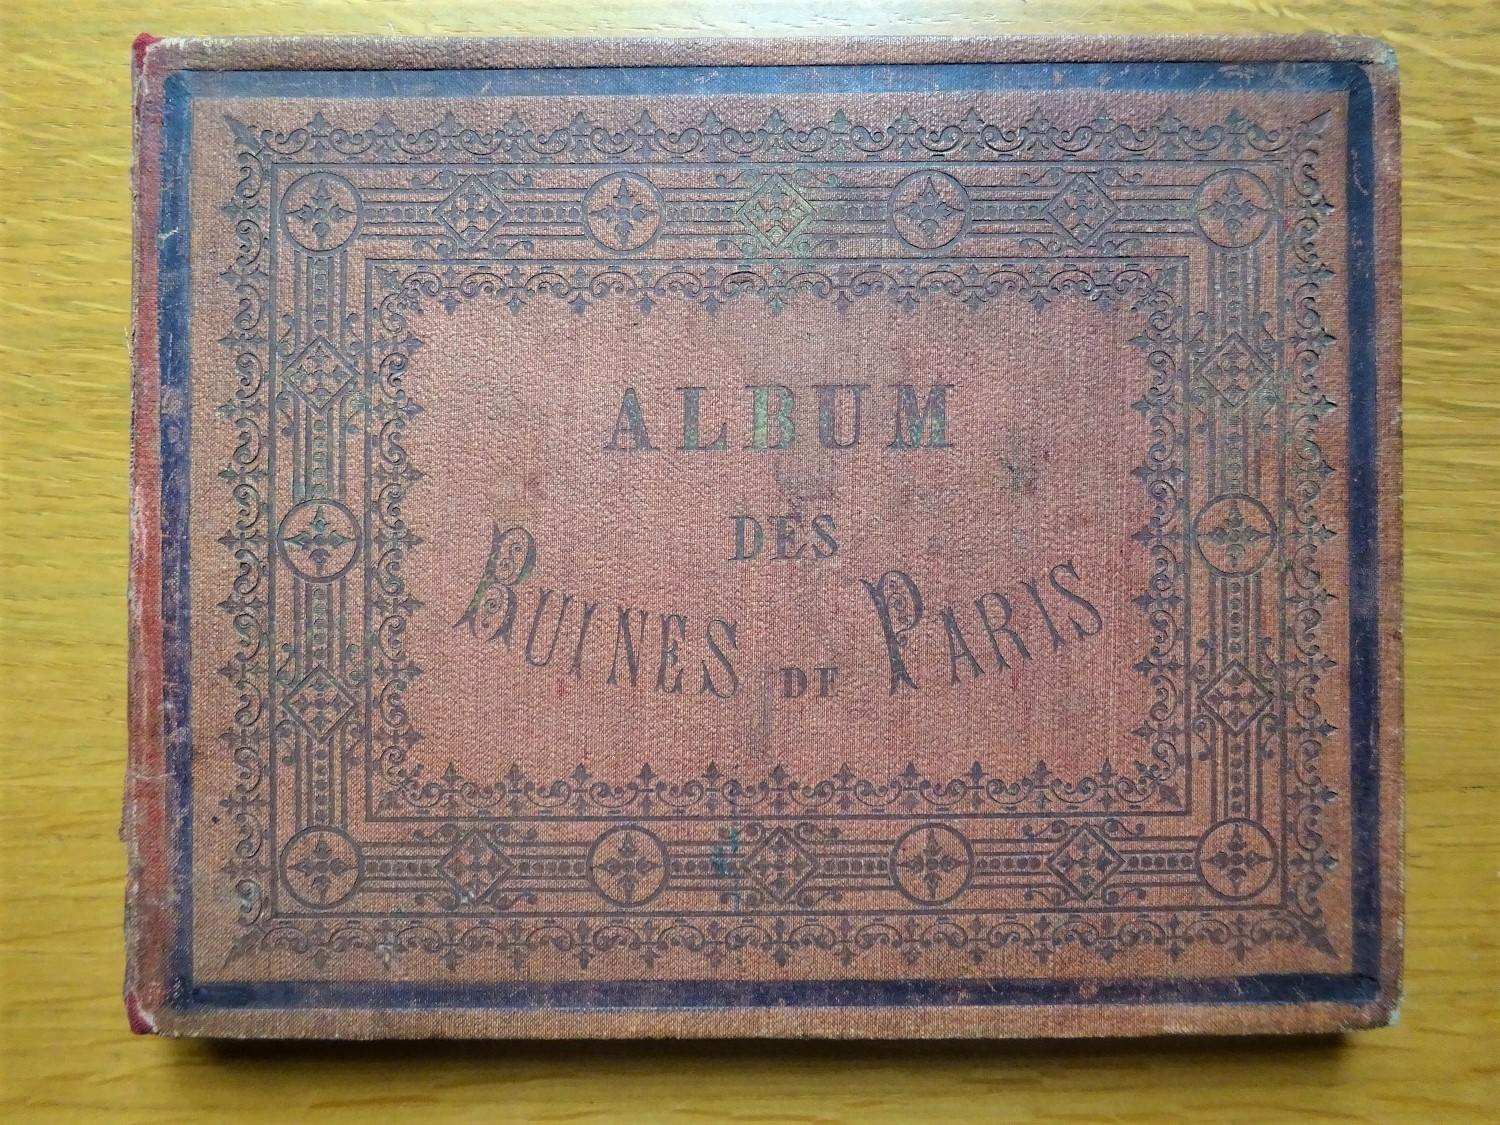 Album photographique des ruines de Paris